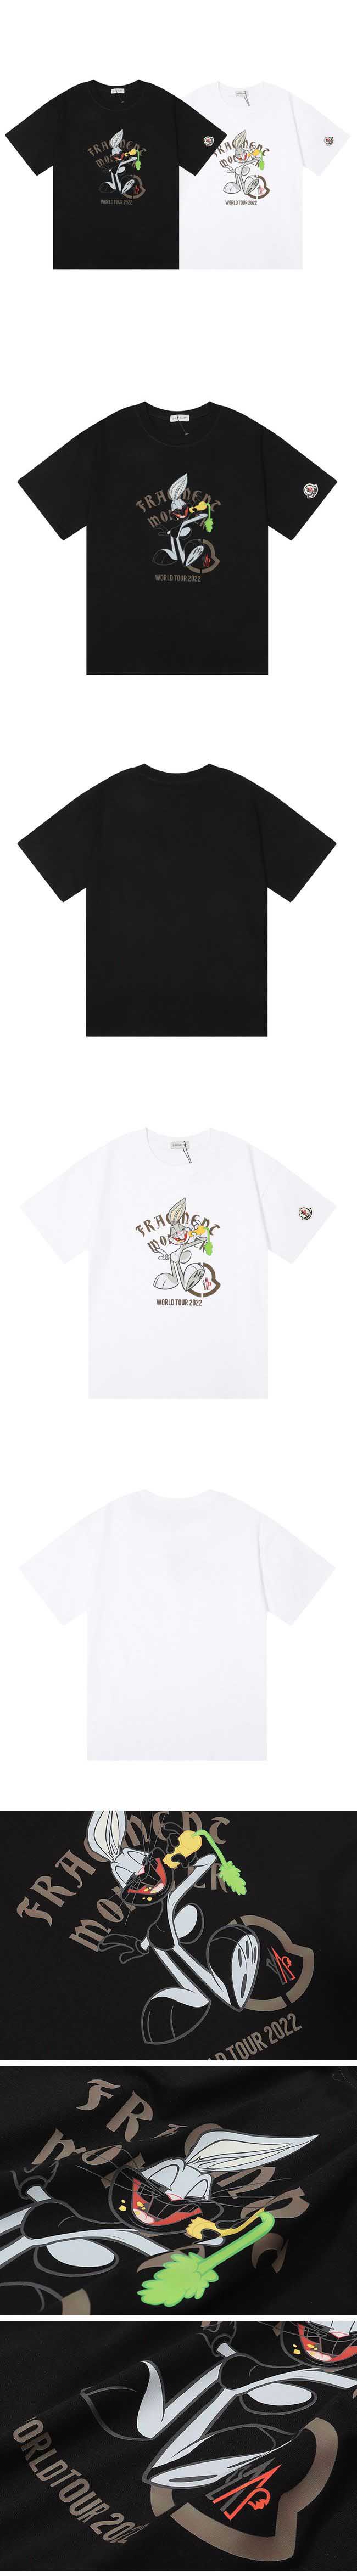 Moncler x Bugs Bunny Carrot Print Tee モンクレール x バッグス バニー キャロット プリント Tシャツ